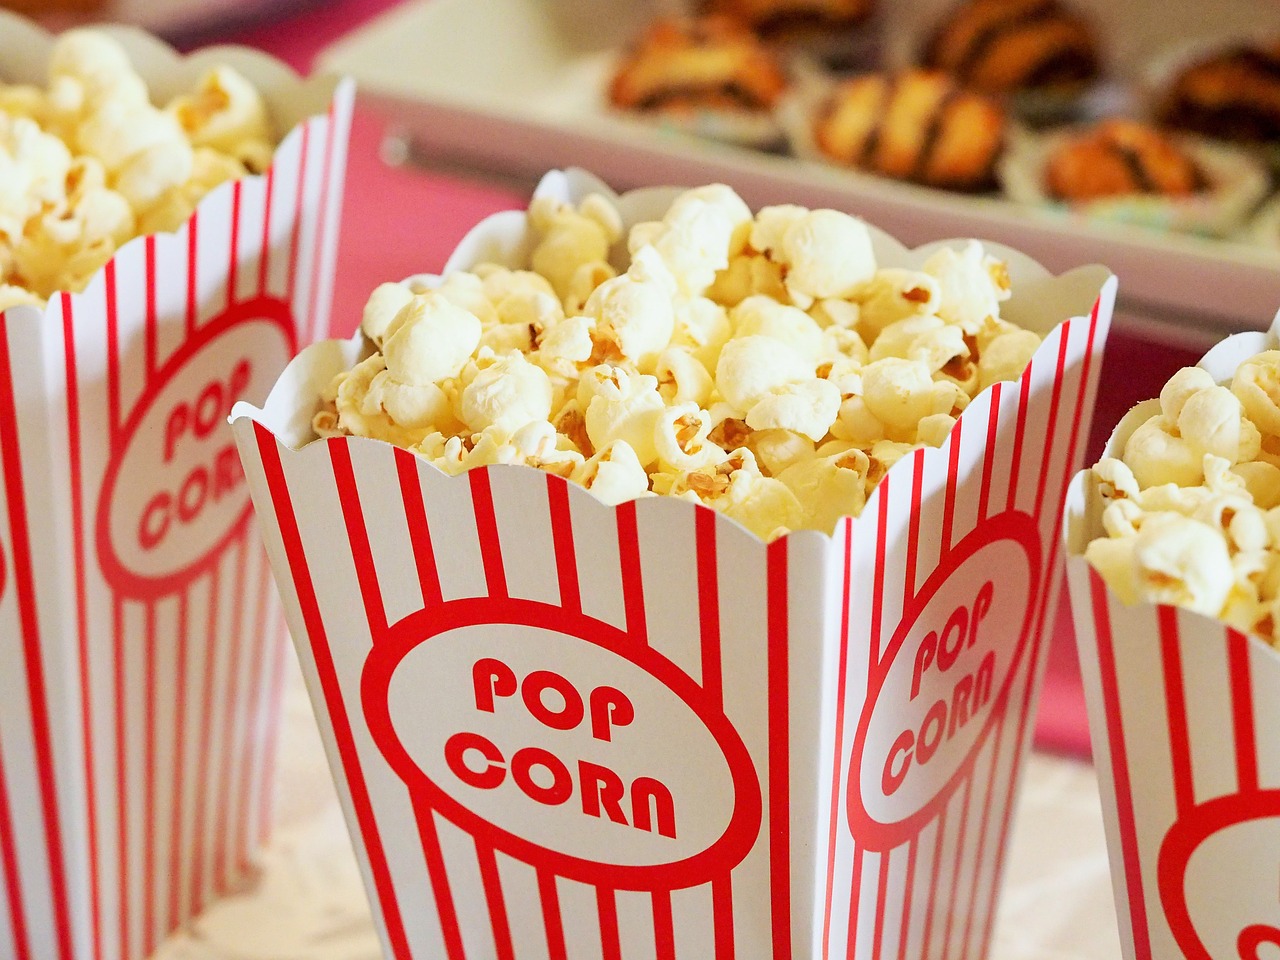 Movie theater popcorn and snacks.